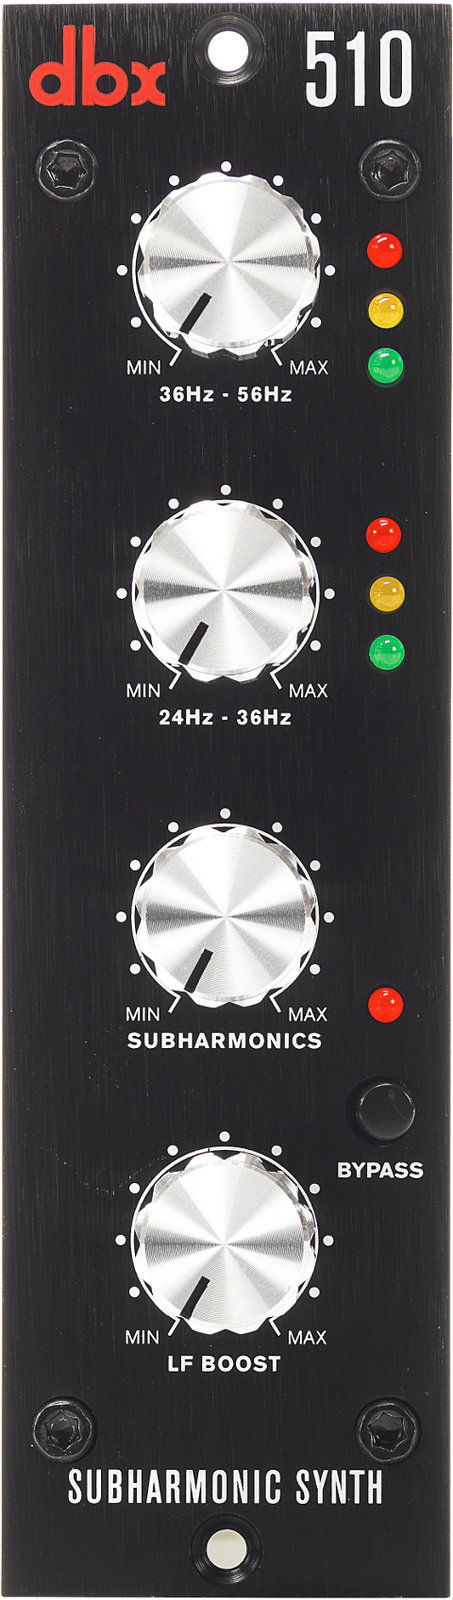 Signalprocessor dbx 510 Subharmonic Synth